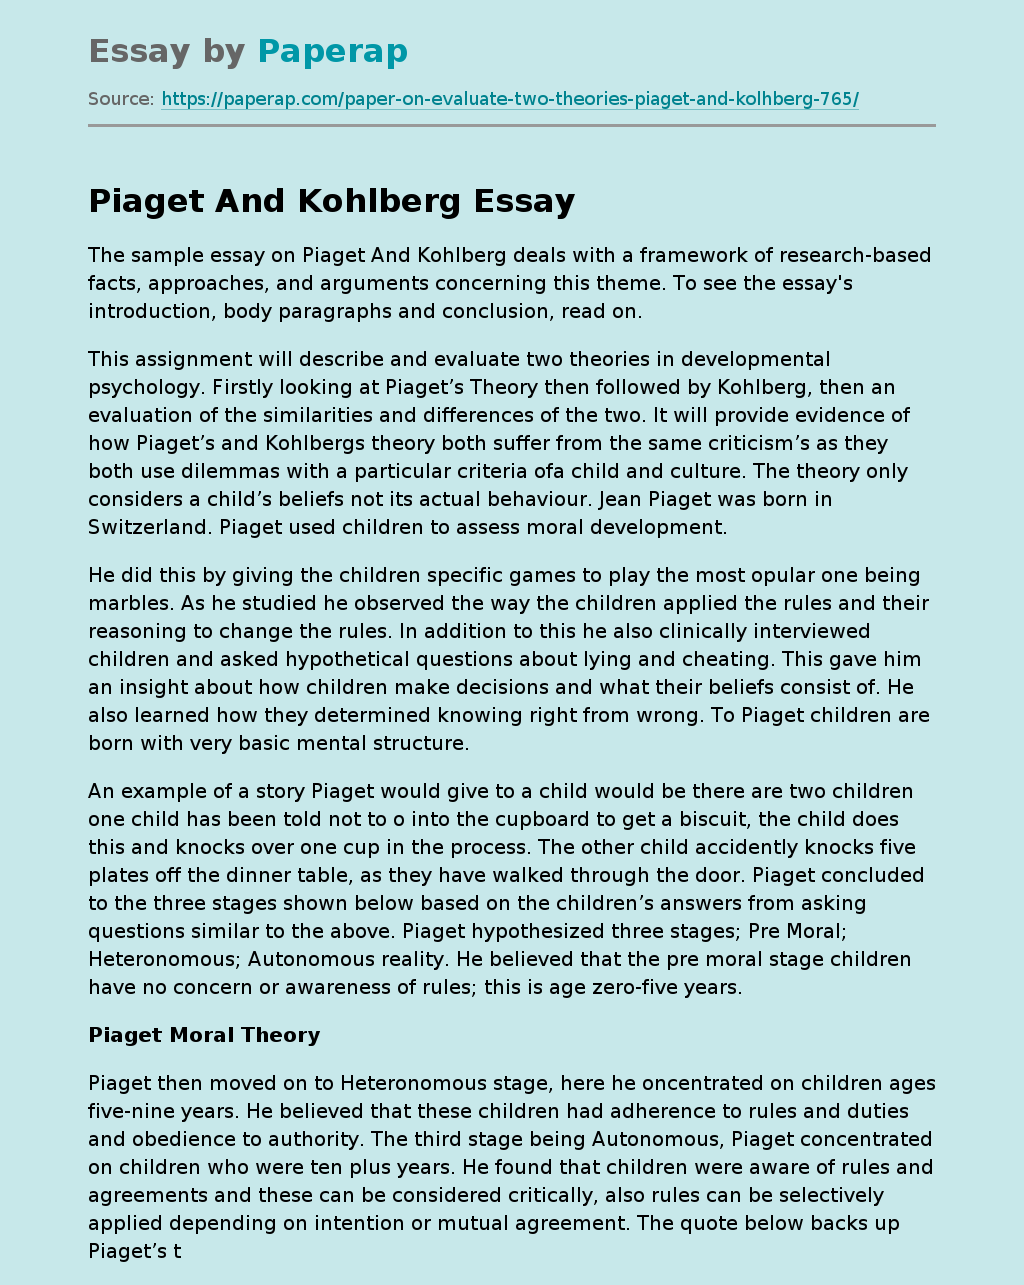 Piaget And Kohlberg